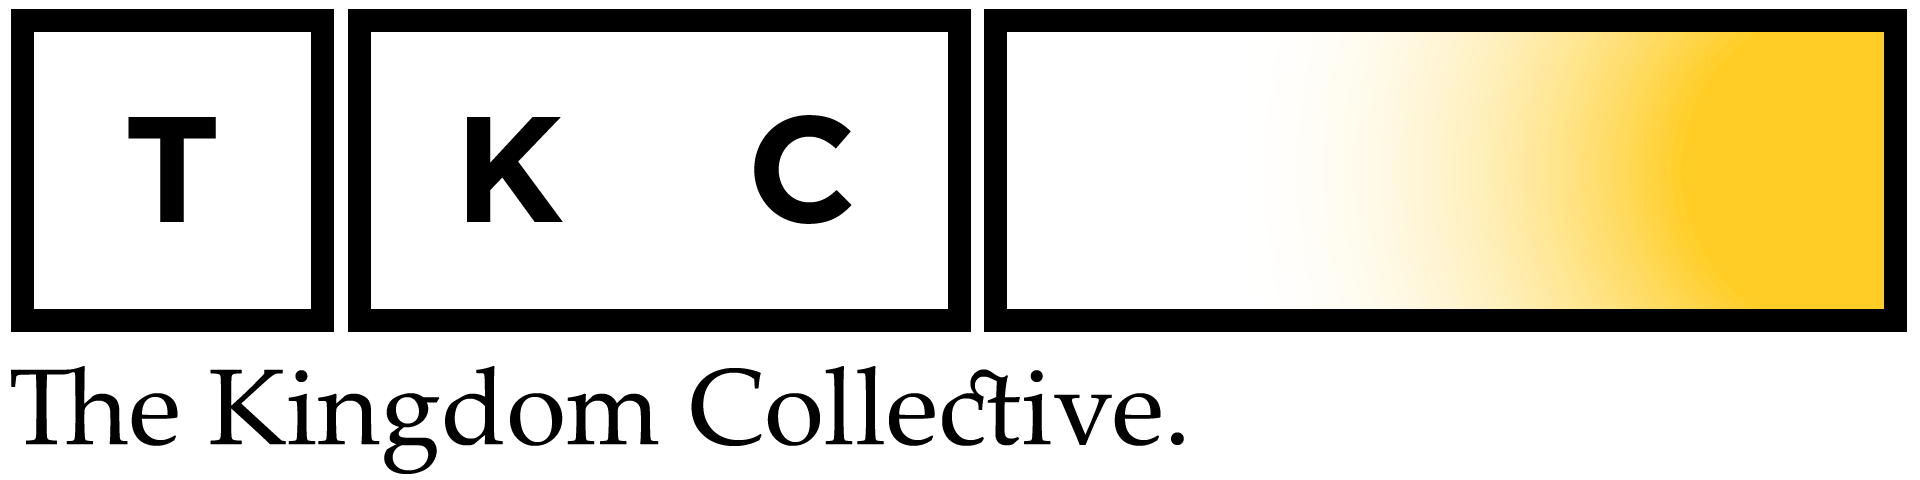 The Kingdom Collective